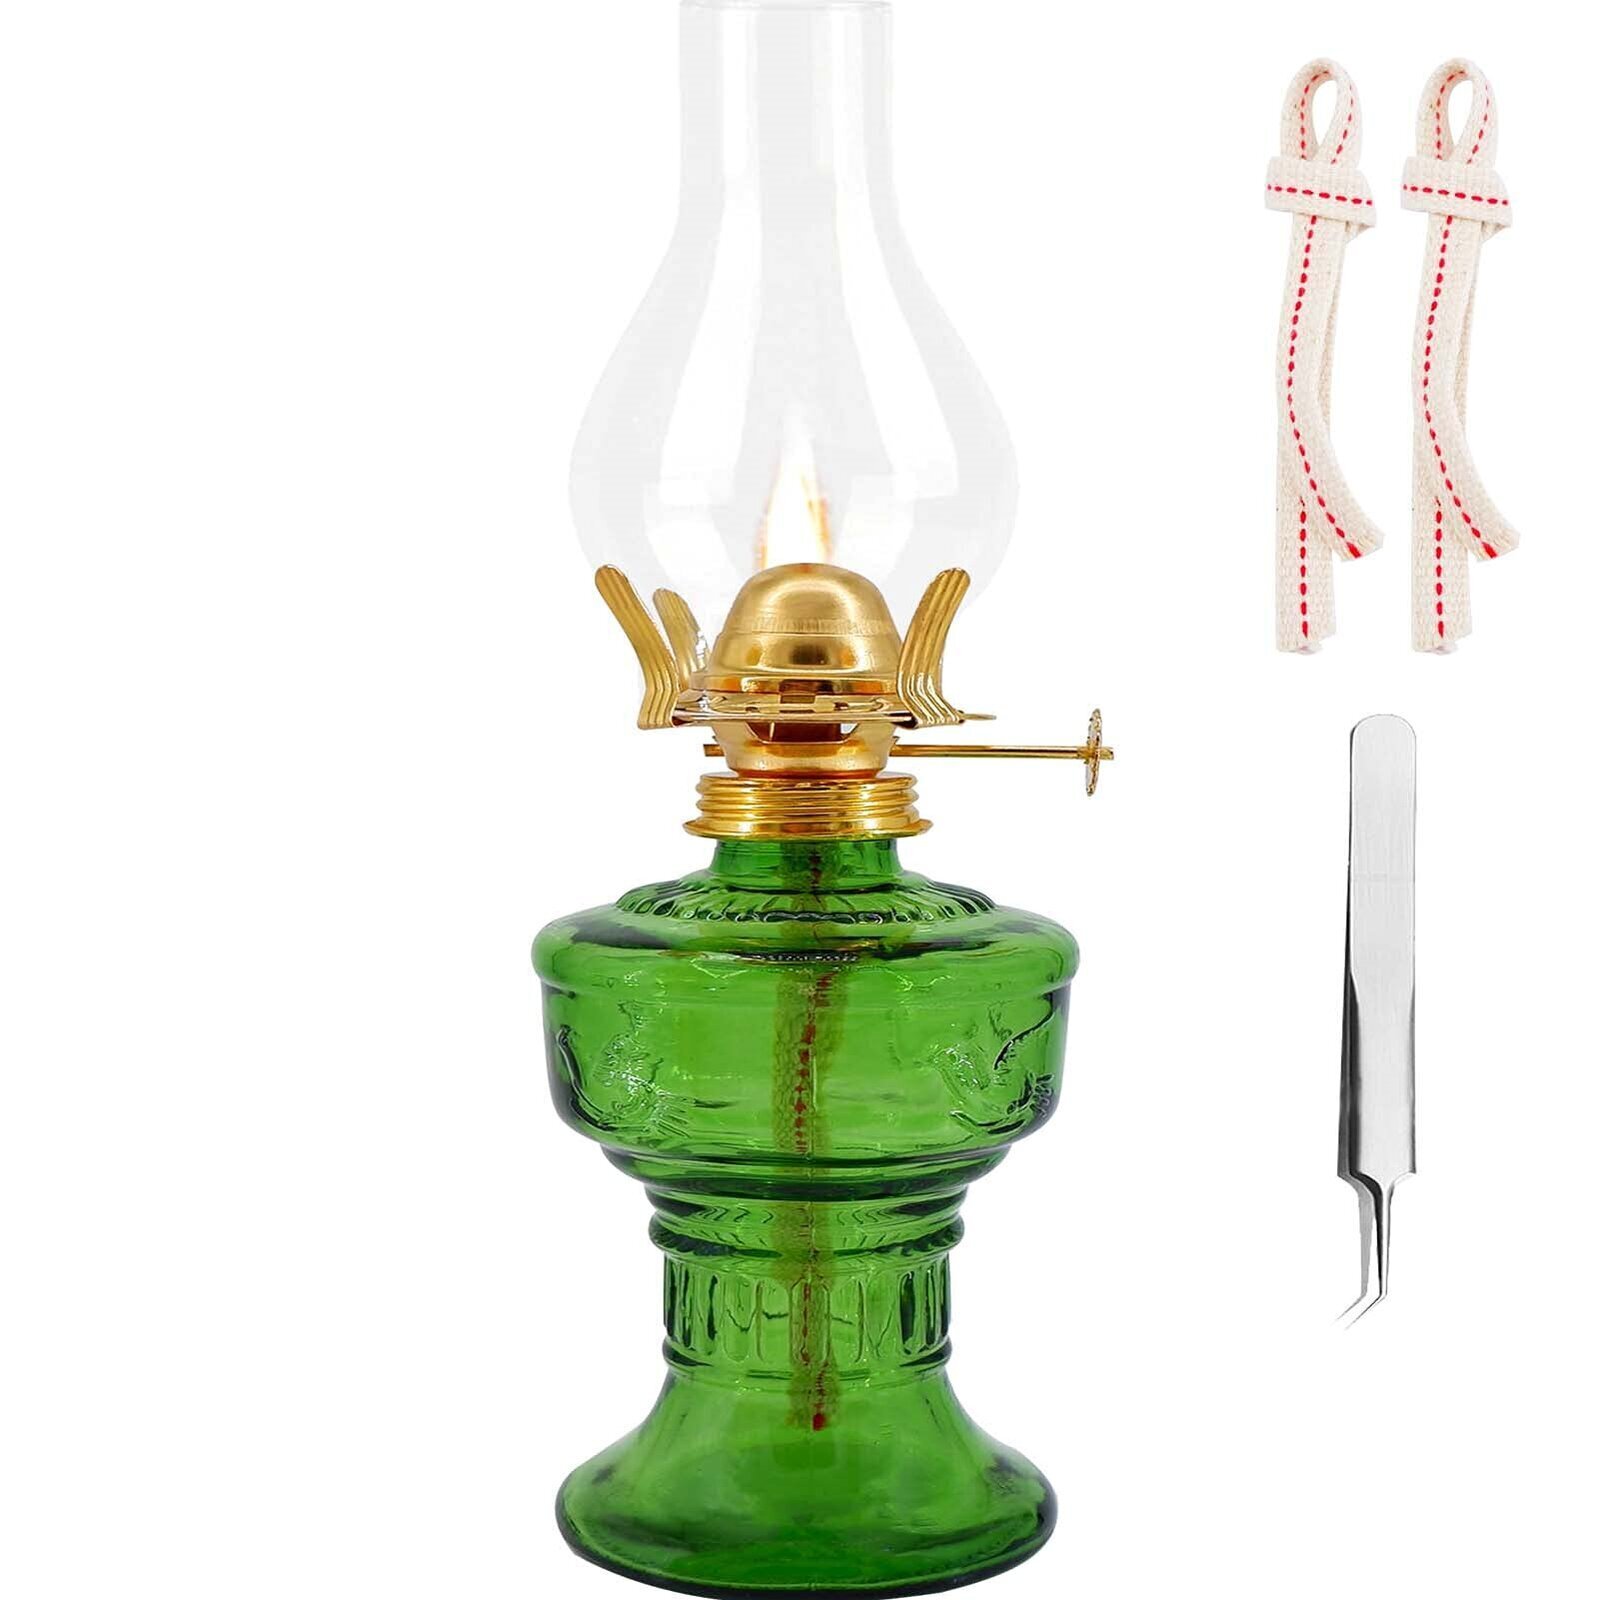 Retro styled Vintage Oil Lamp